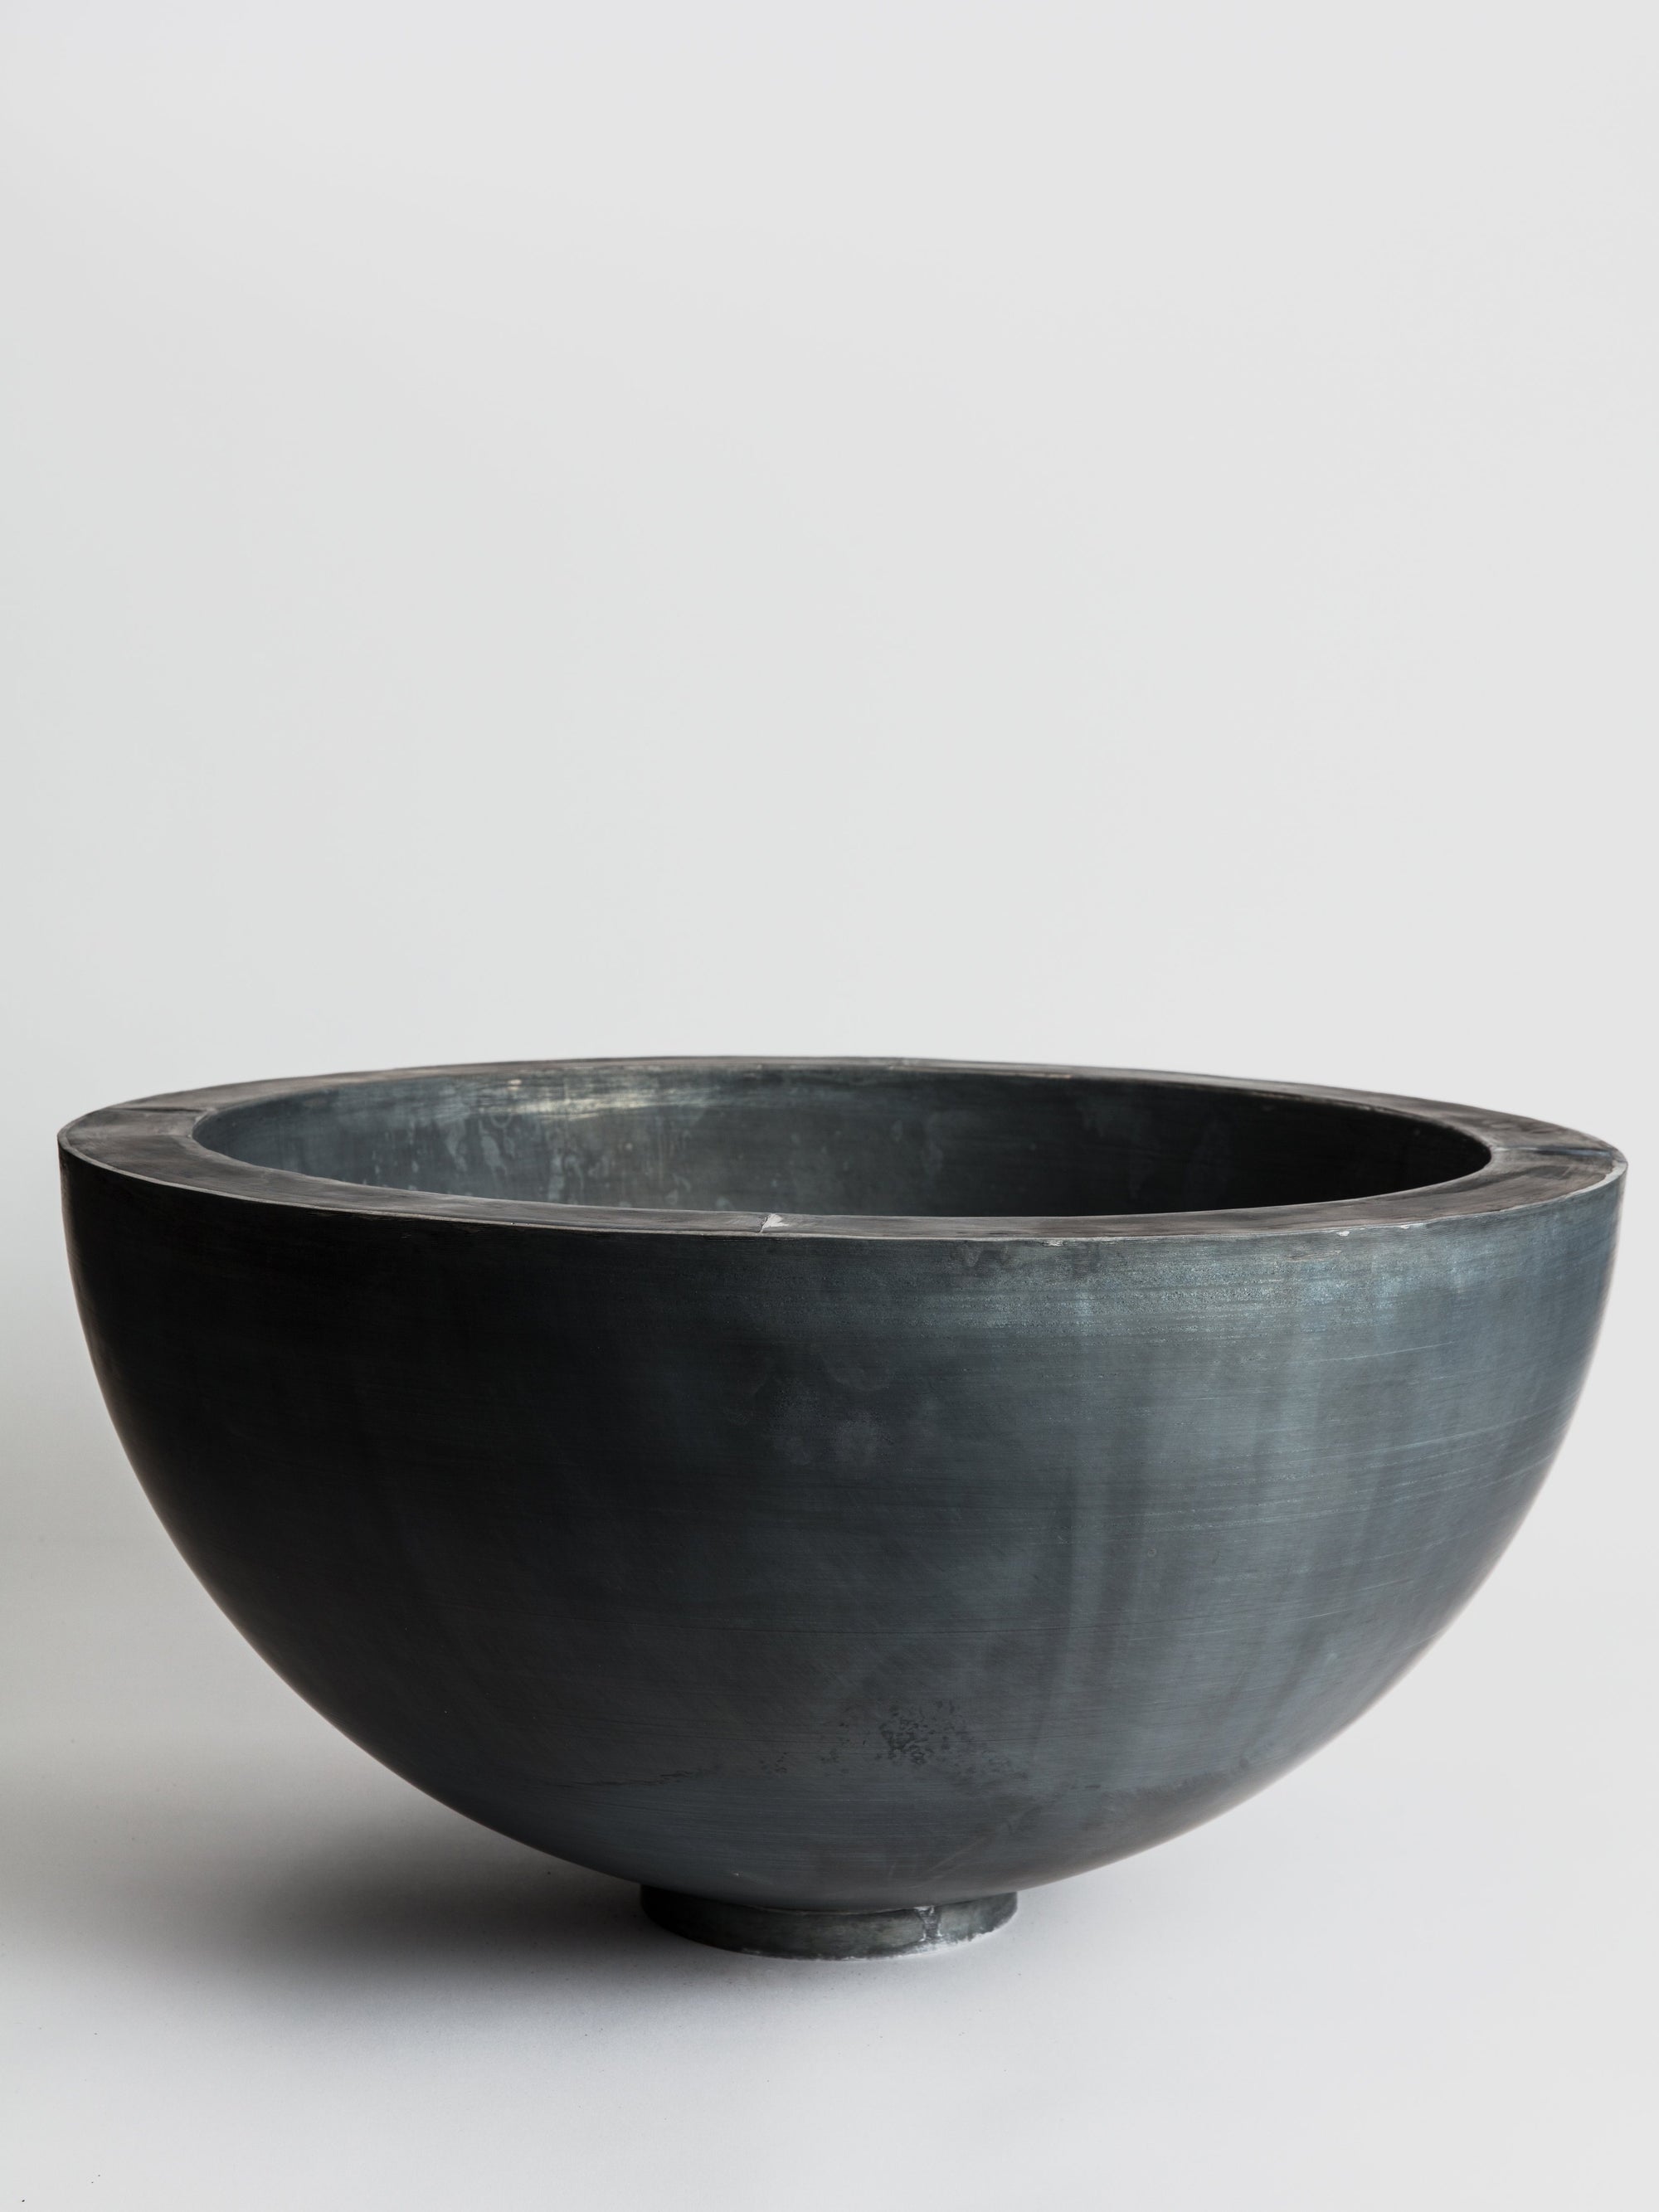 Zinc - Half Bowl Pottery Domani 